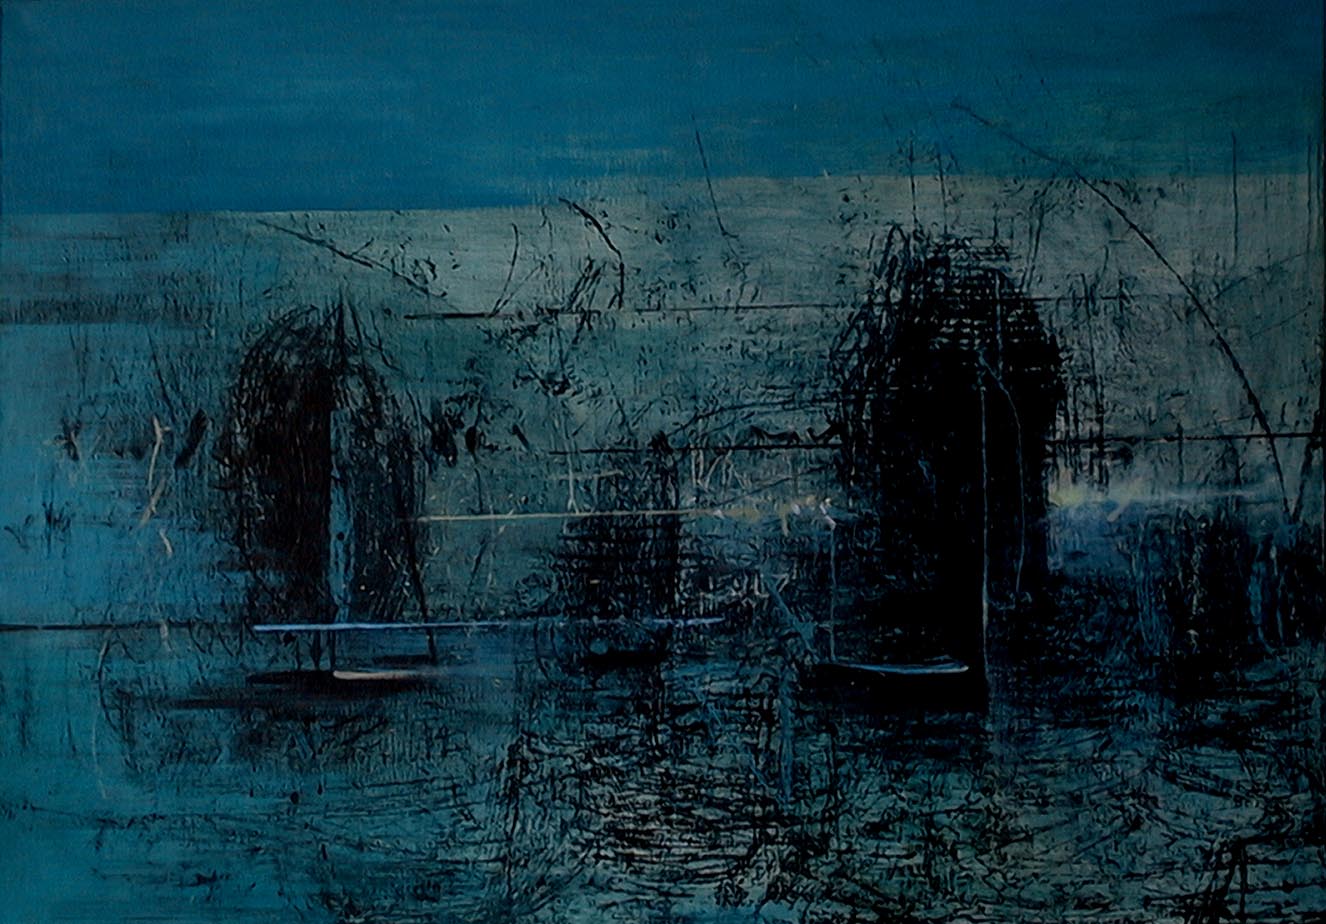 Mendrek Pawel 
"Life of the Horizon 16 Uhr 45", 2002
Acryl / Leinwand
100 x 140 cm